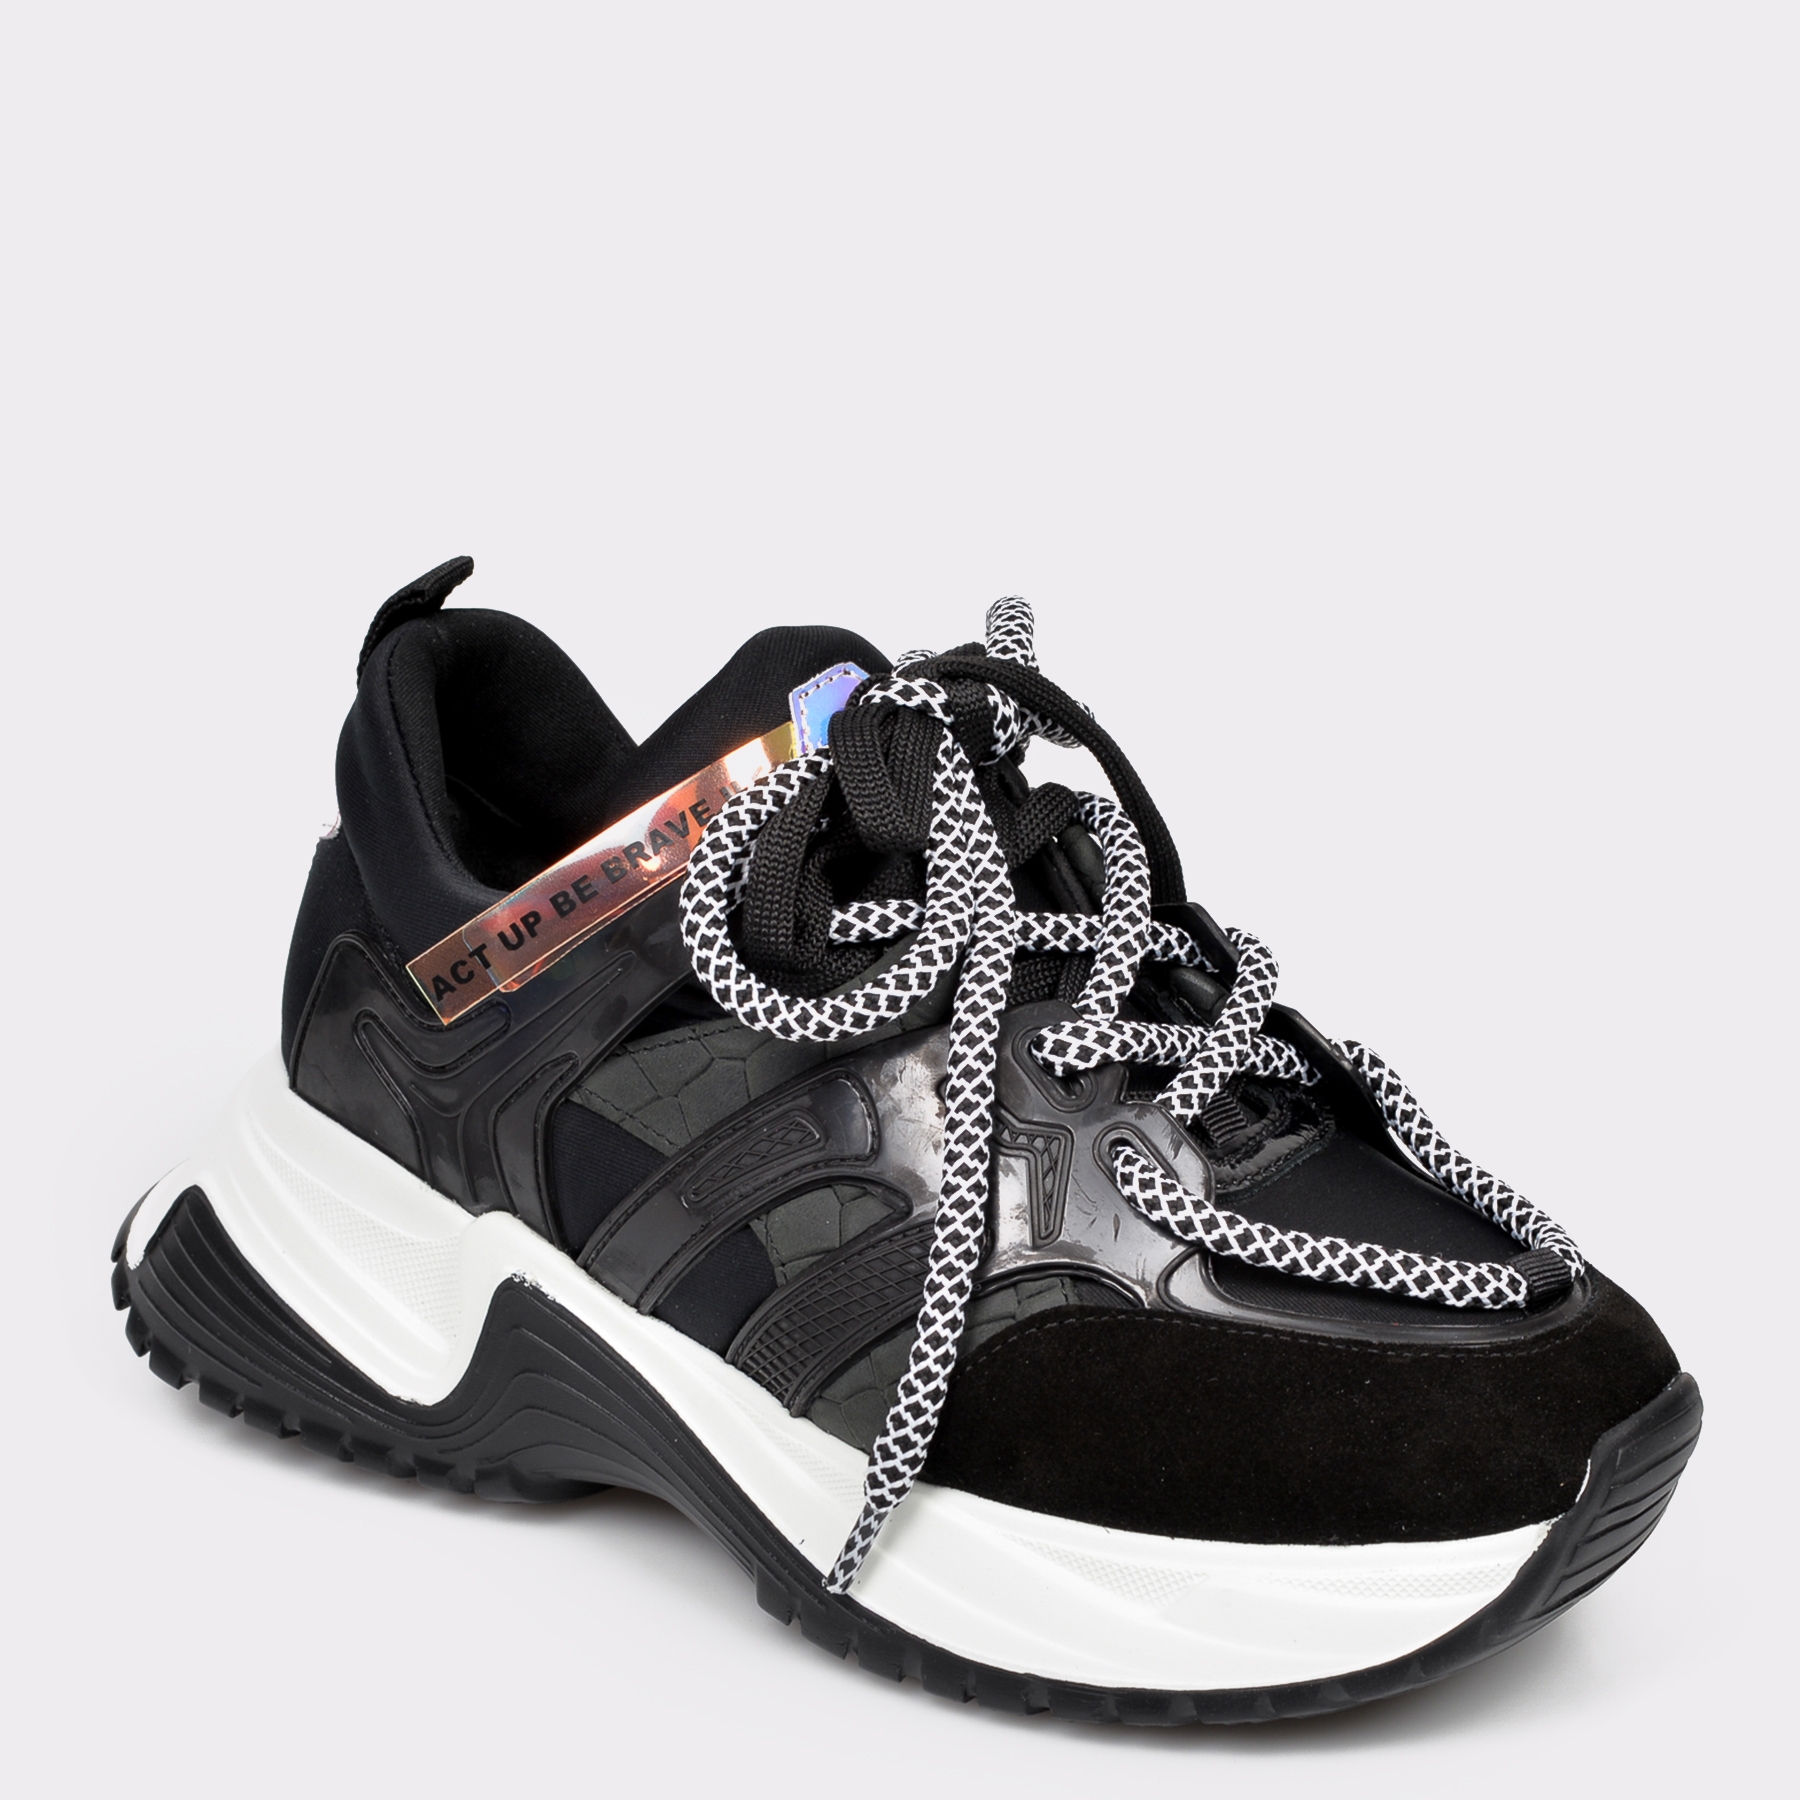 Pantofi sport EPICA negri, 3086, din material textil si piele naturala